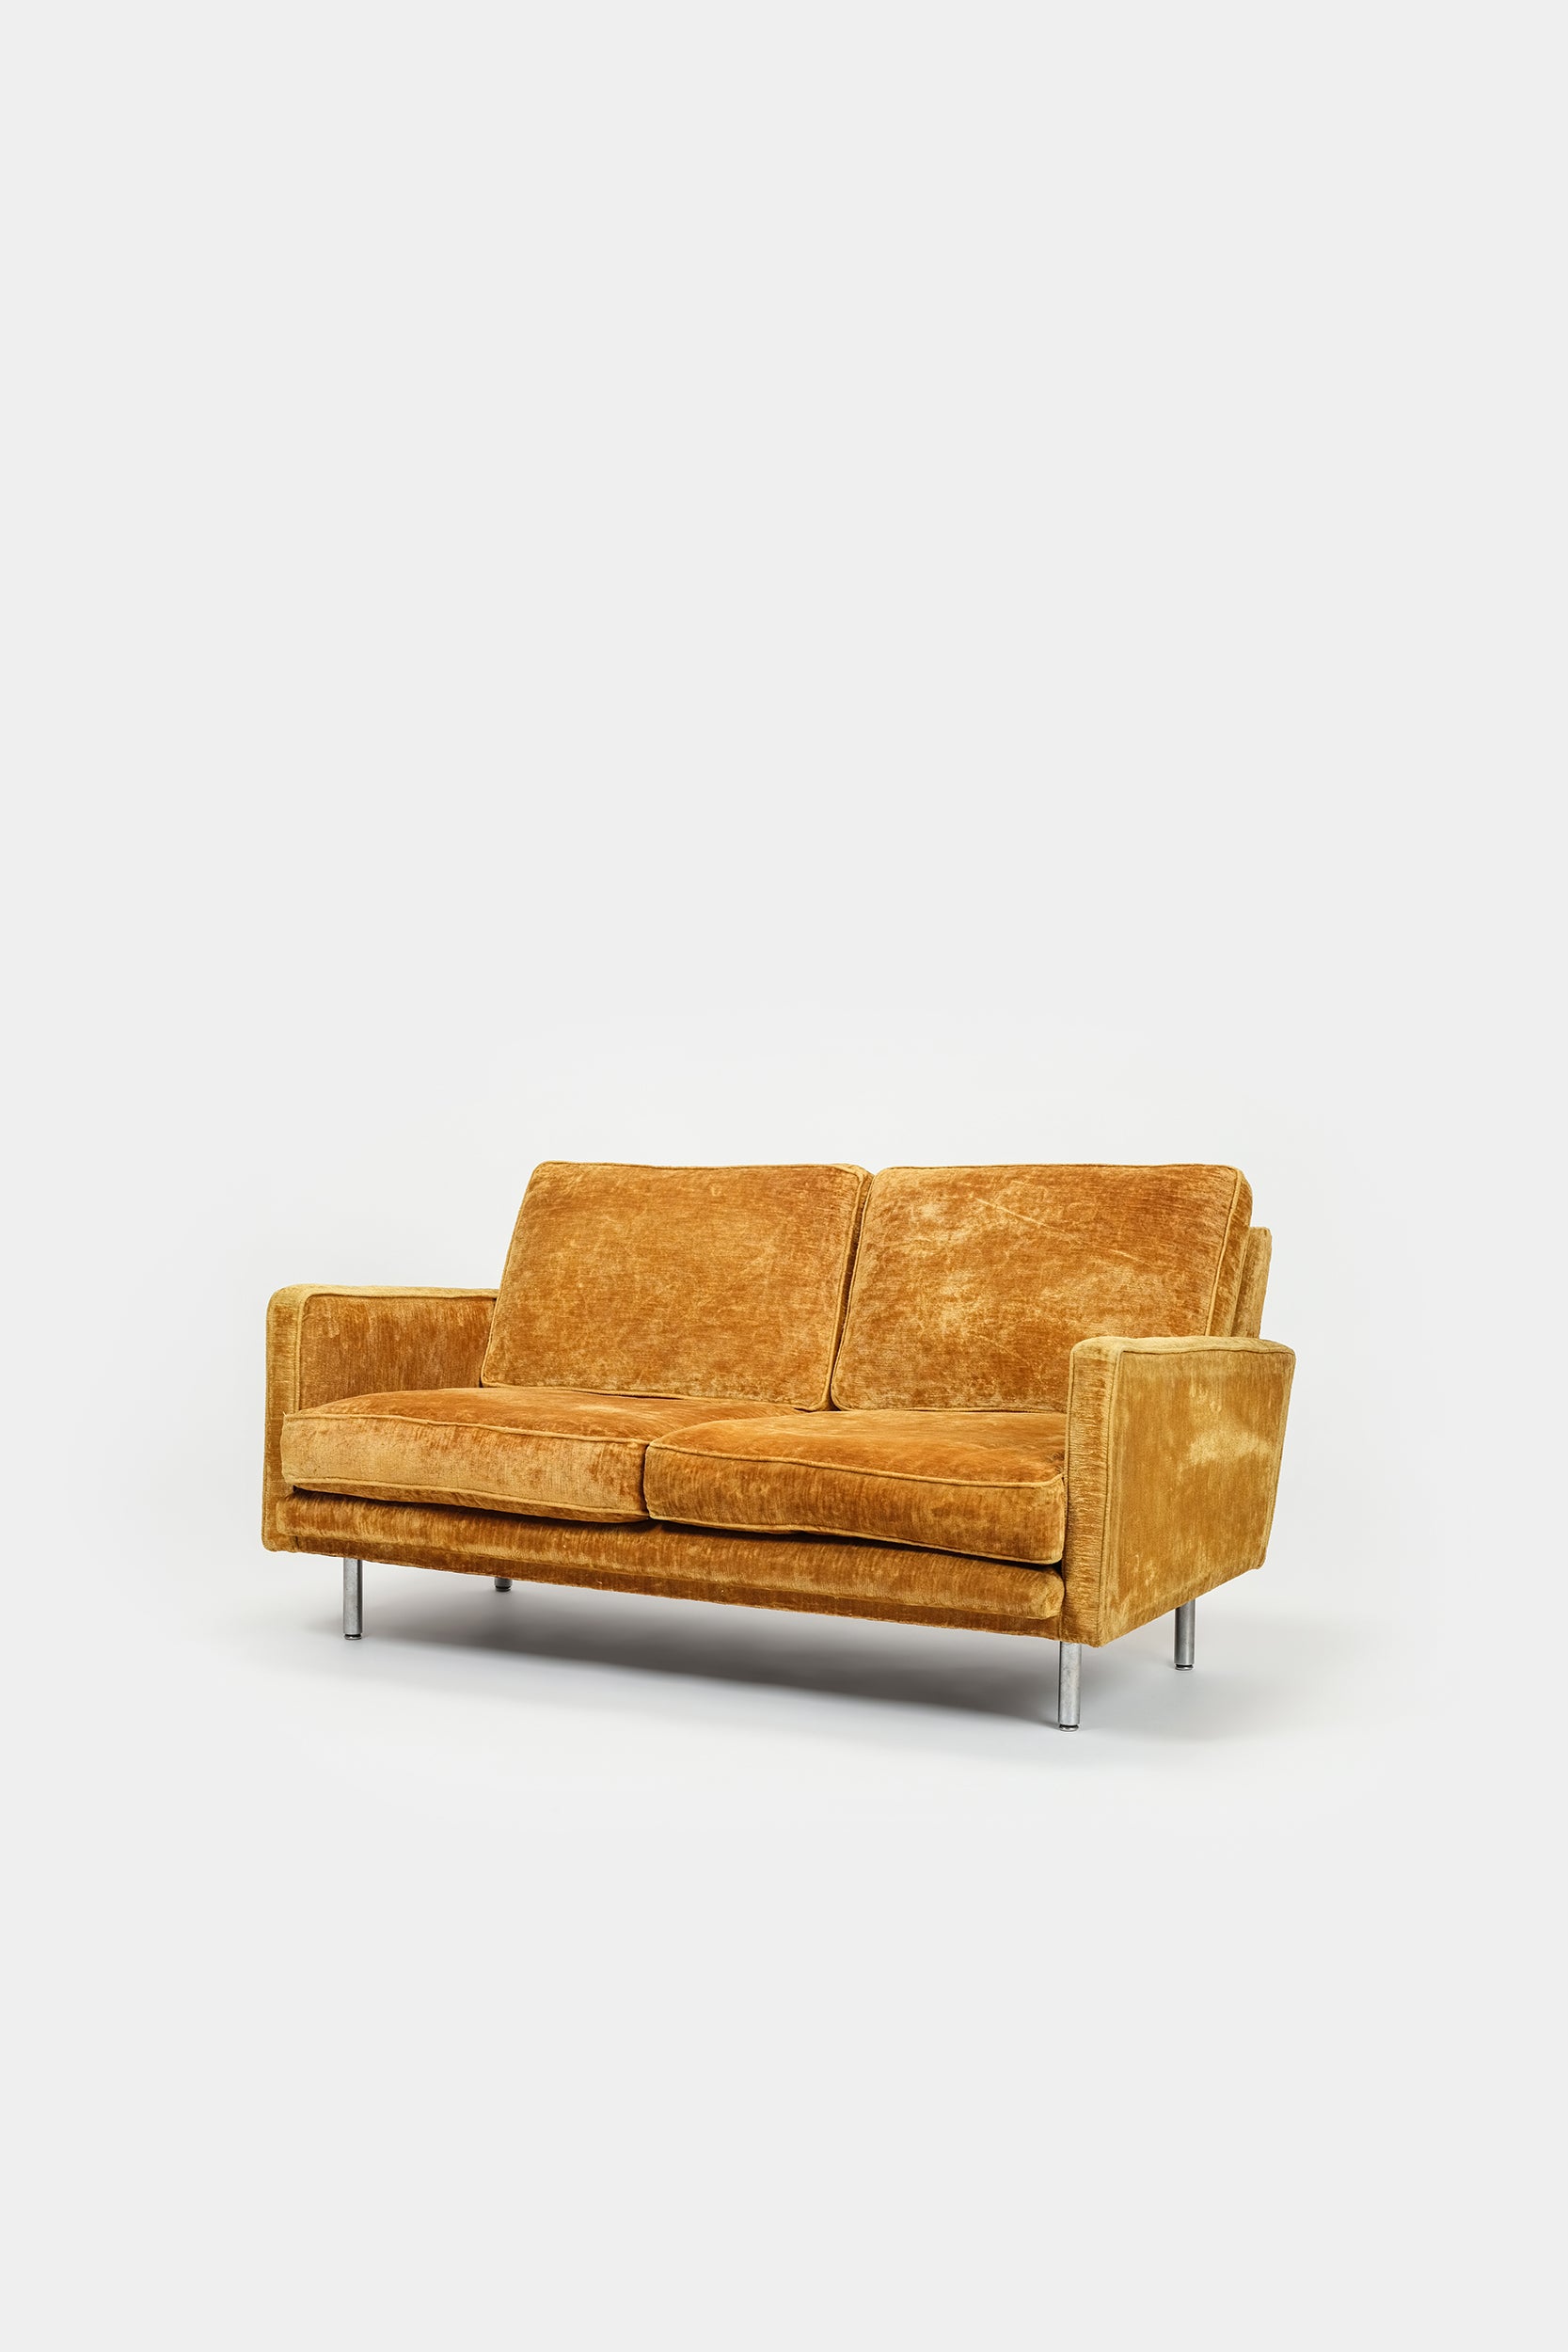 George Nelson, Loose Cushion Zweisitz-Sofa, Hermann Miller 50er